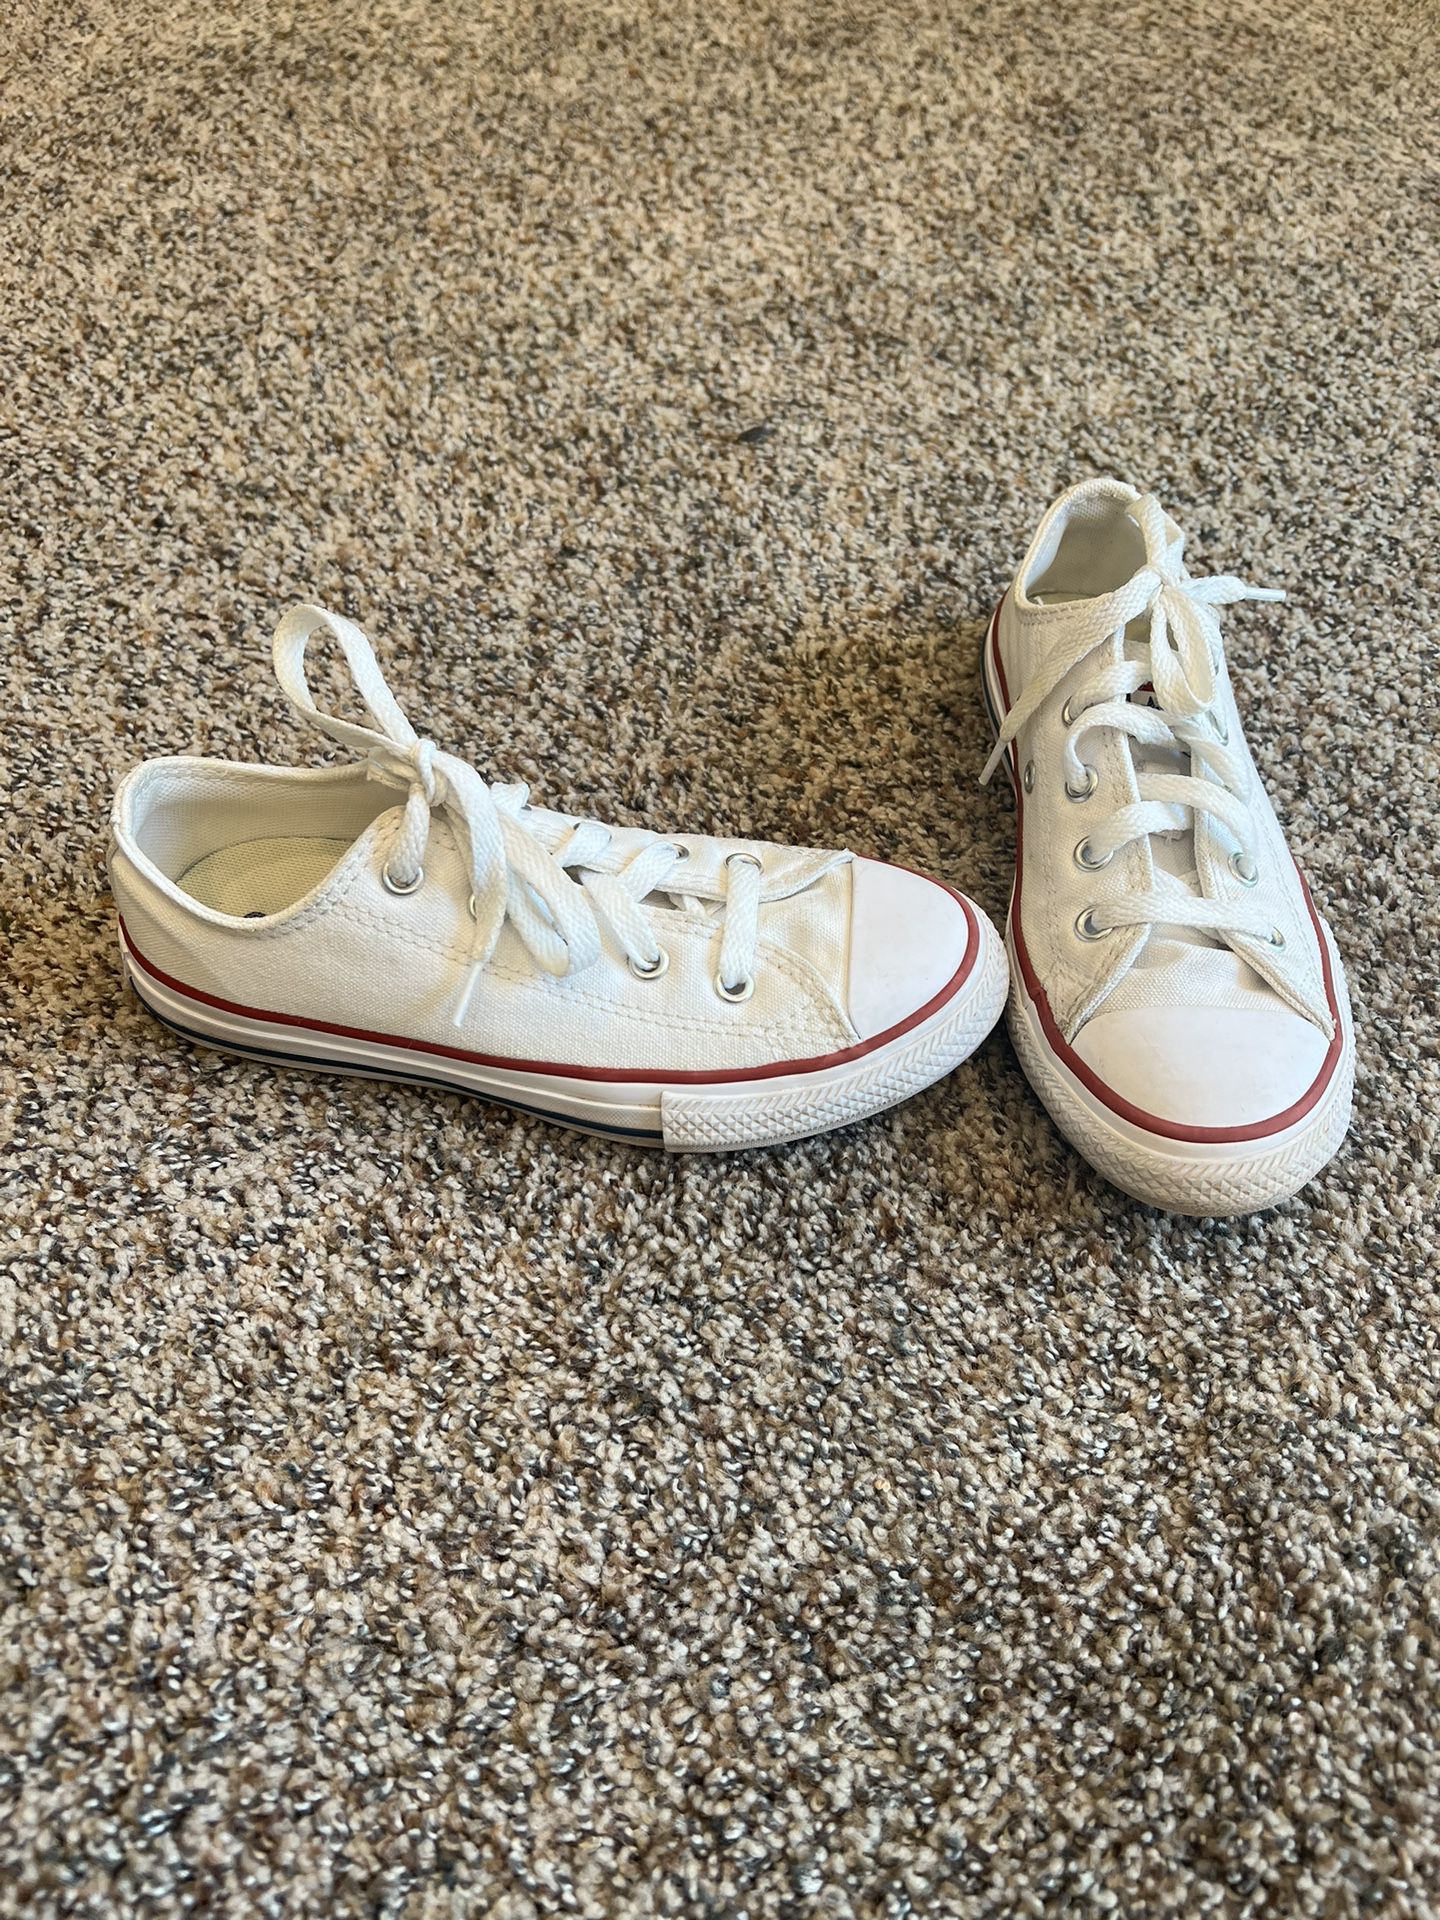 Kids white Converse shoes